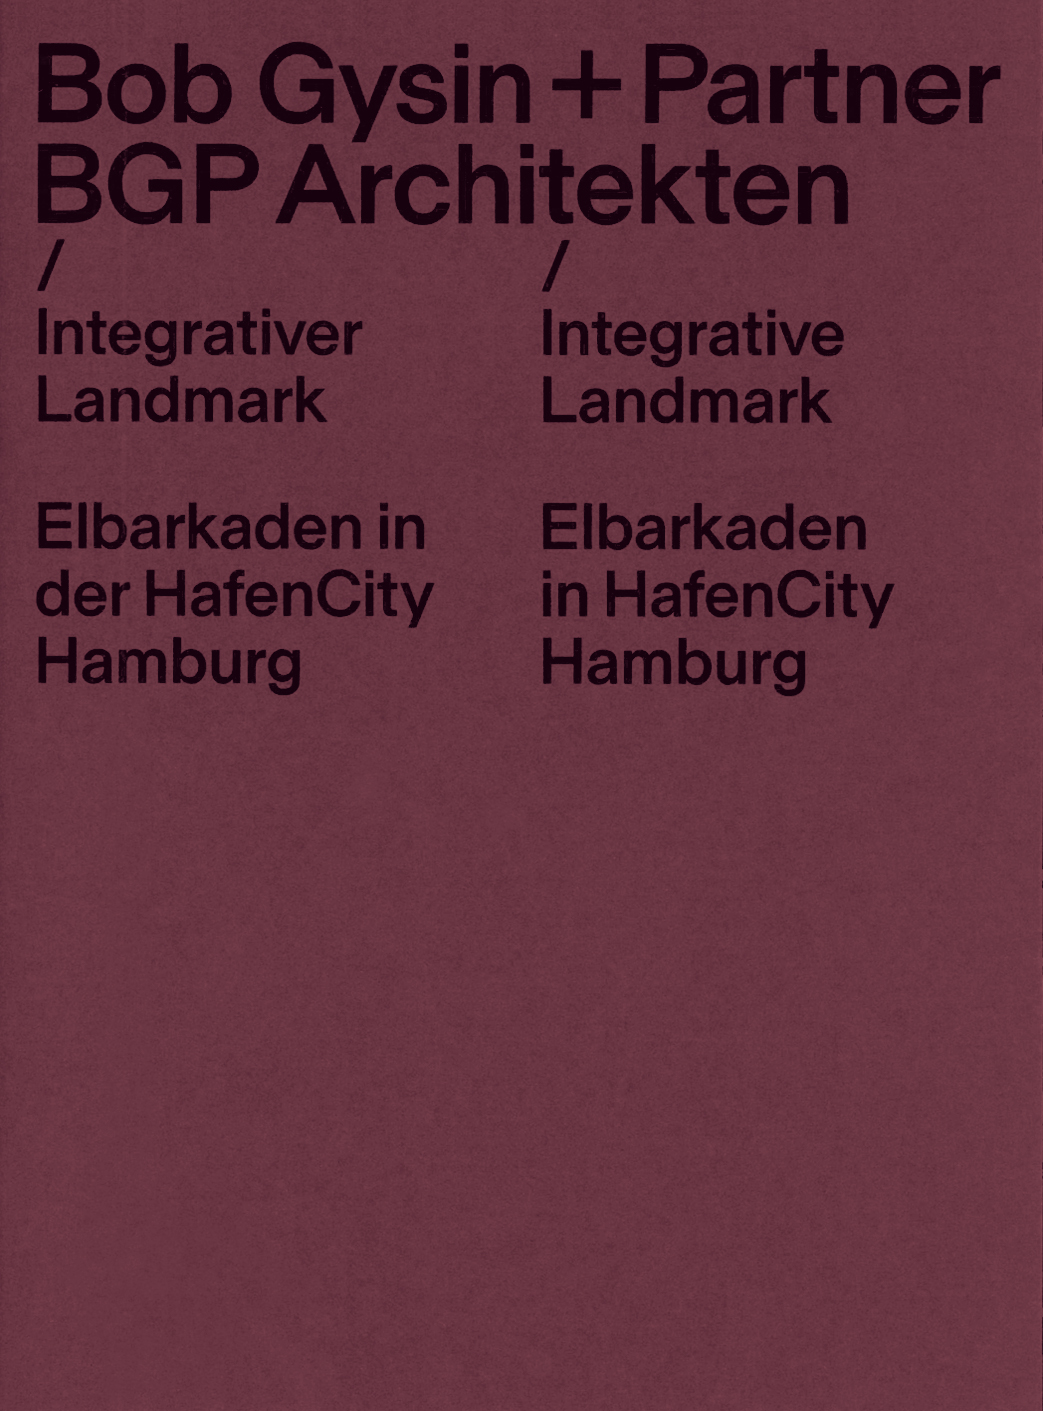 BGP_Elbarkaden_Integrativer_Landmark.jpg